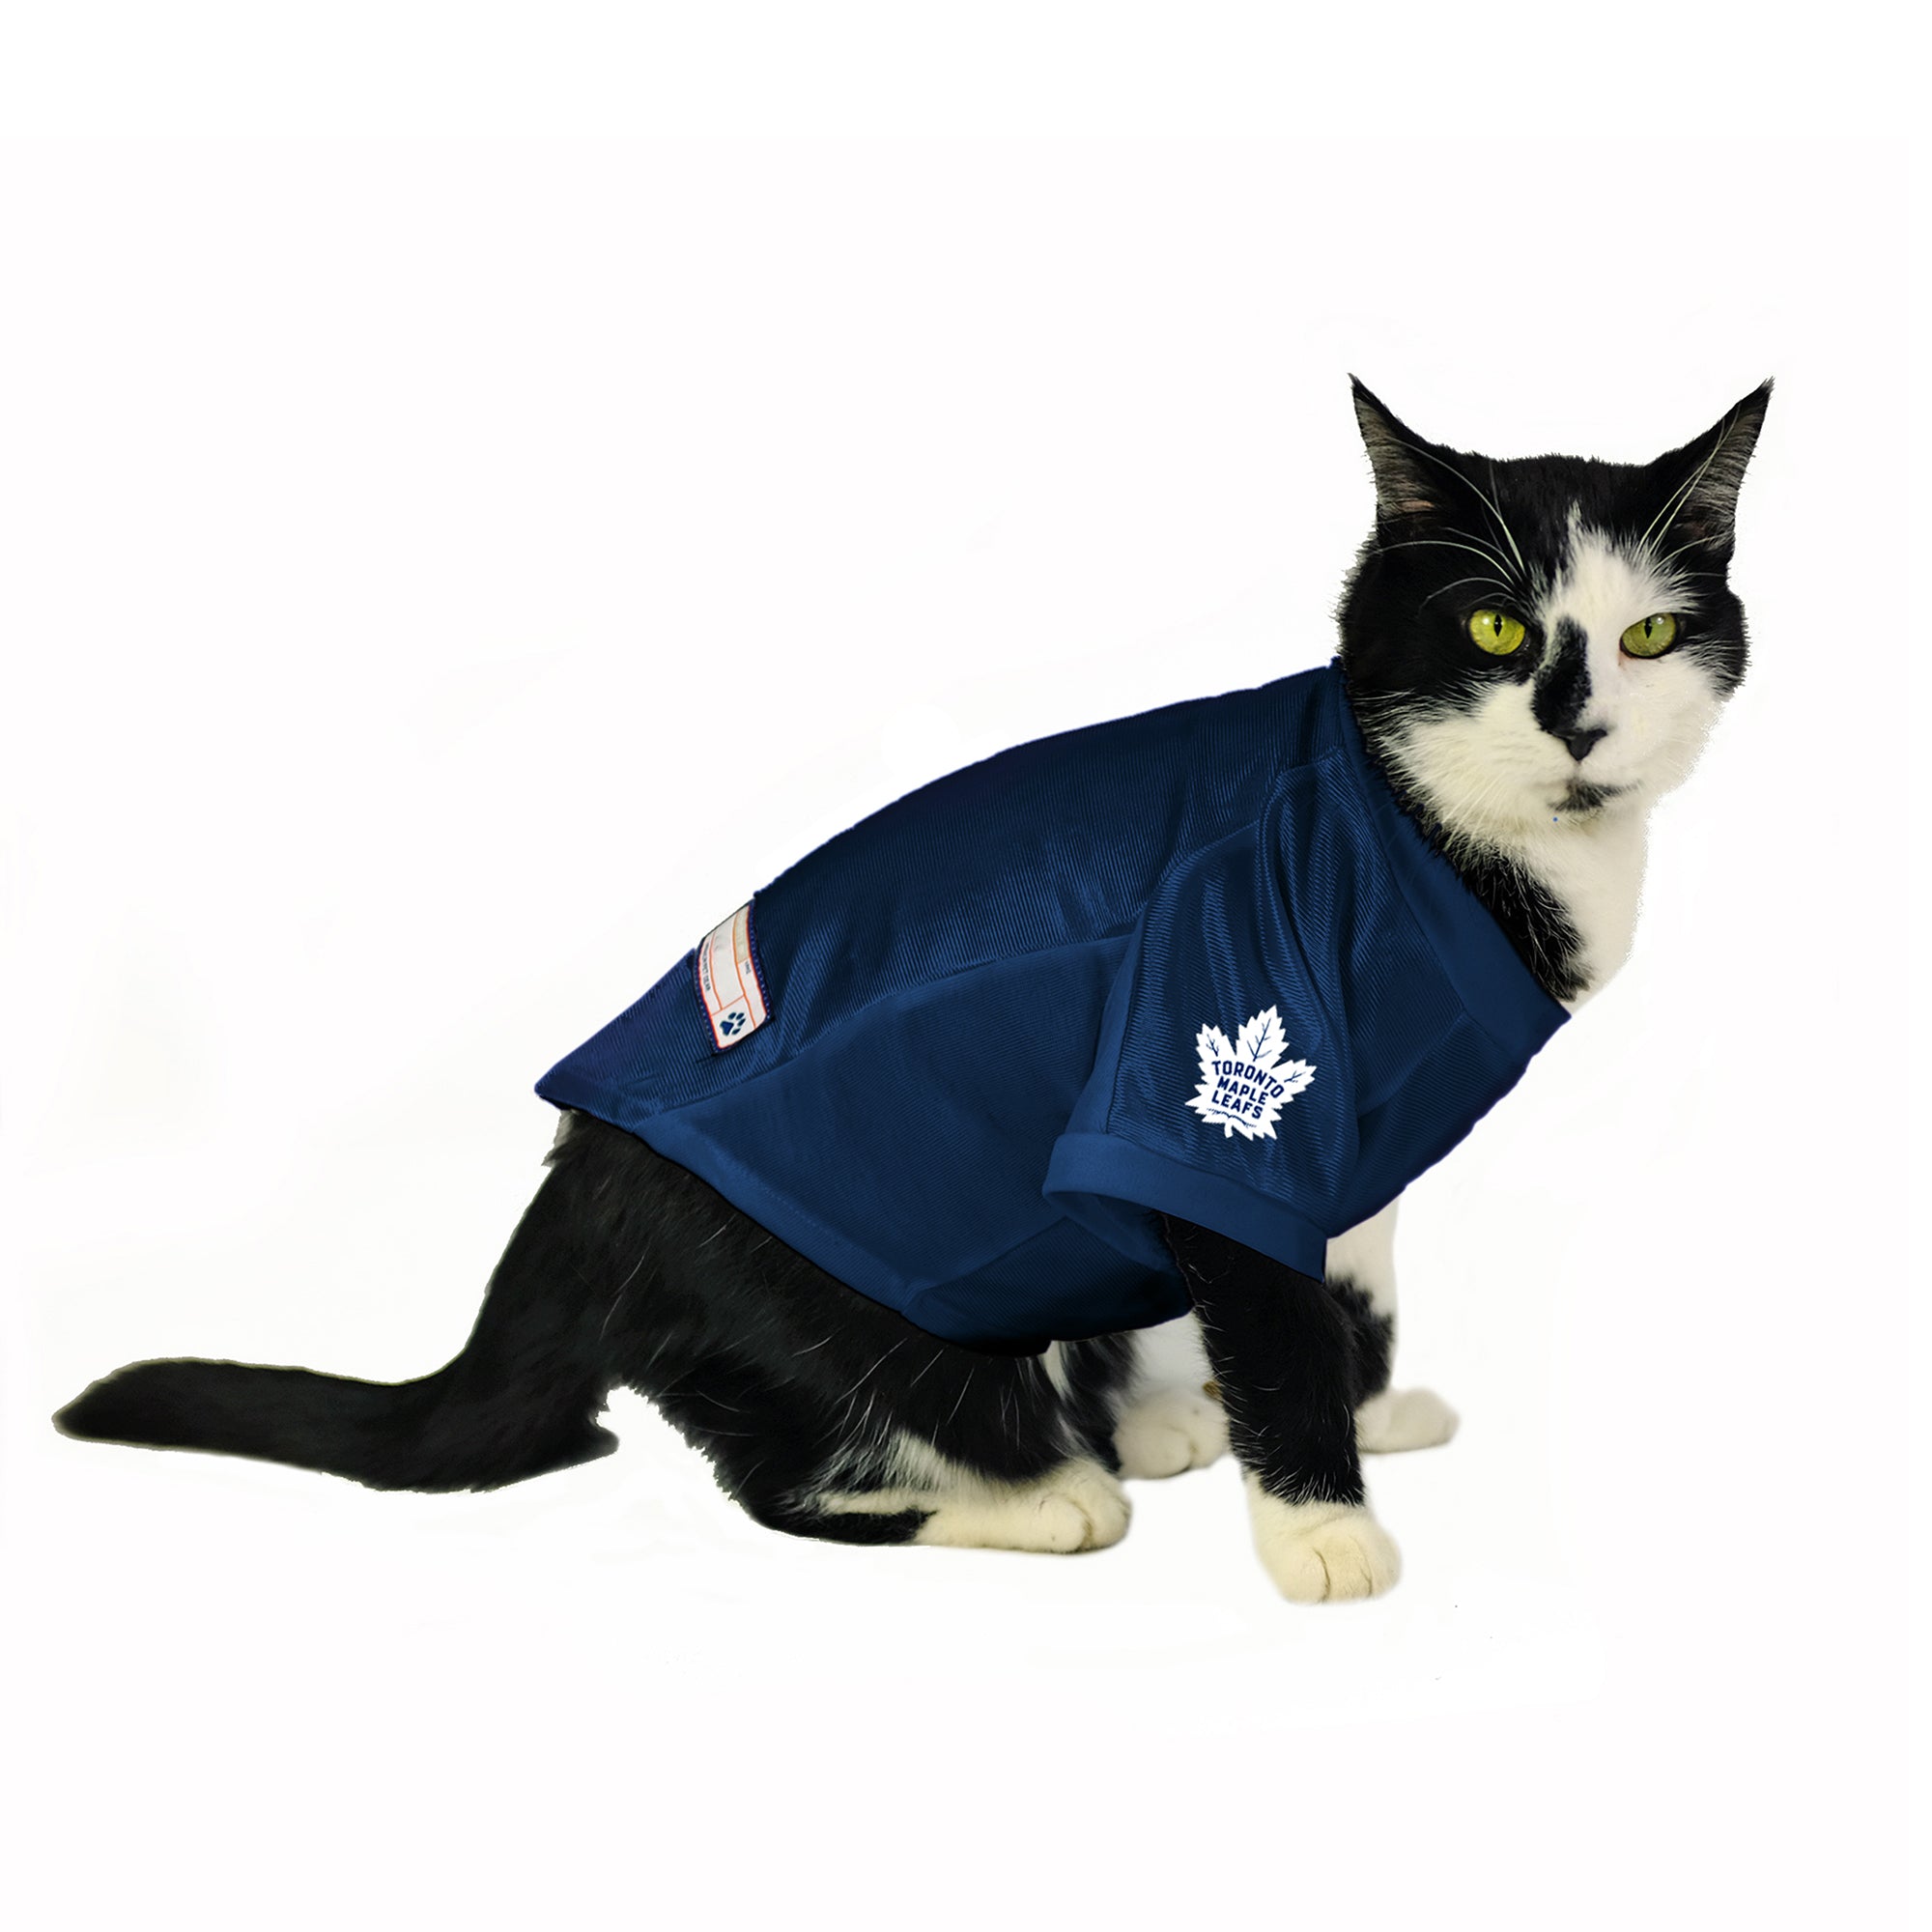 Toronto Maple Leaf Tiny Dog Jersey